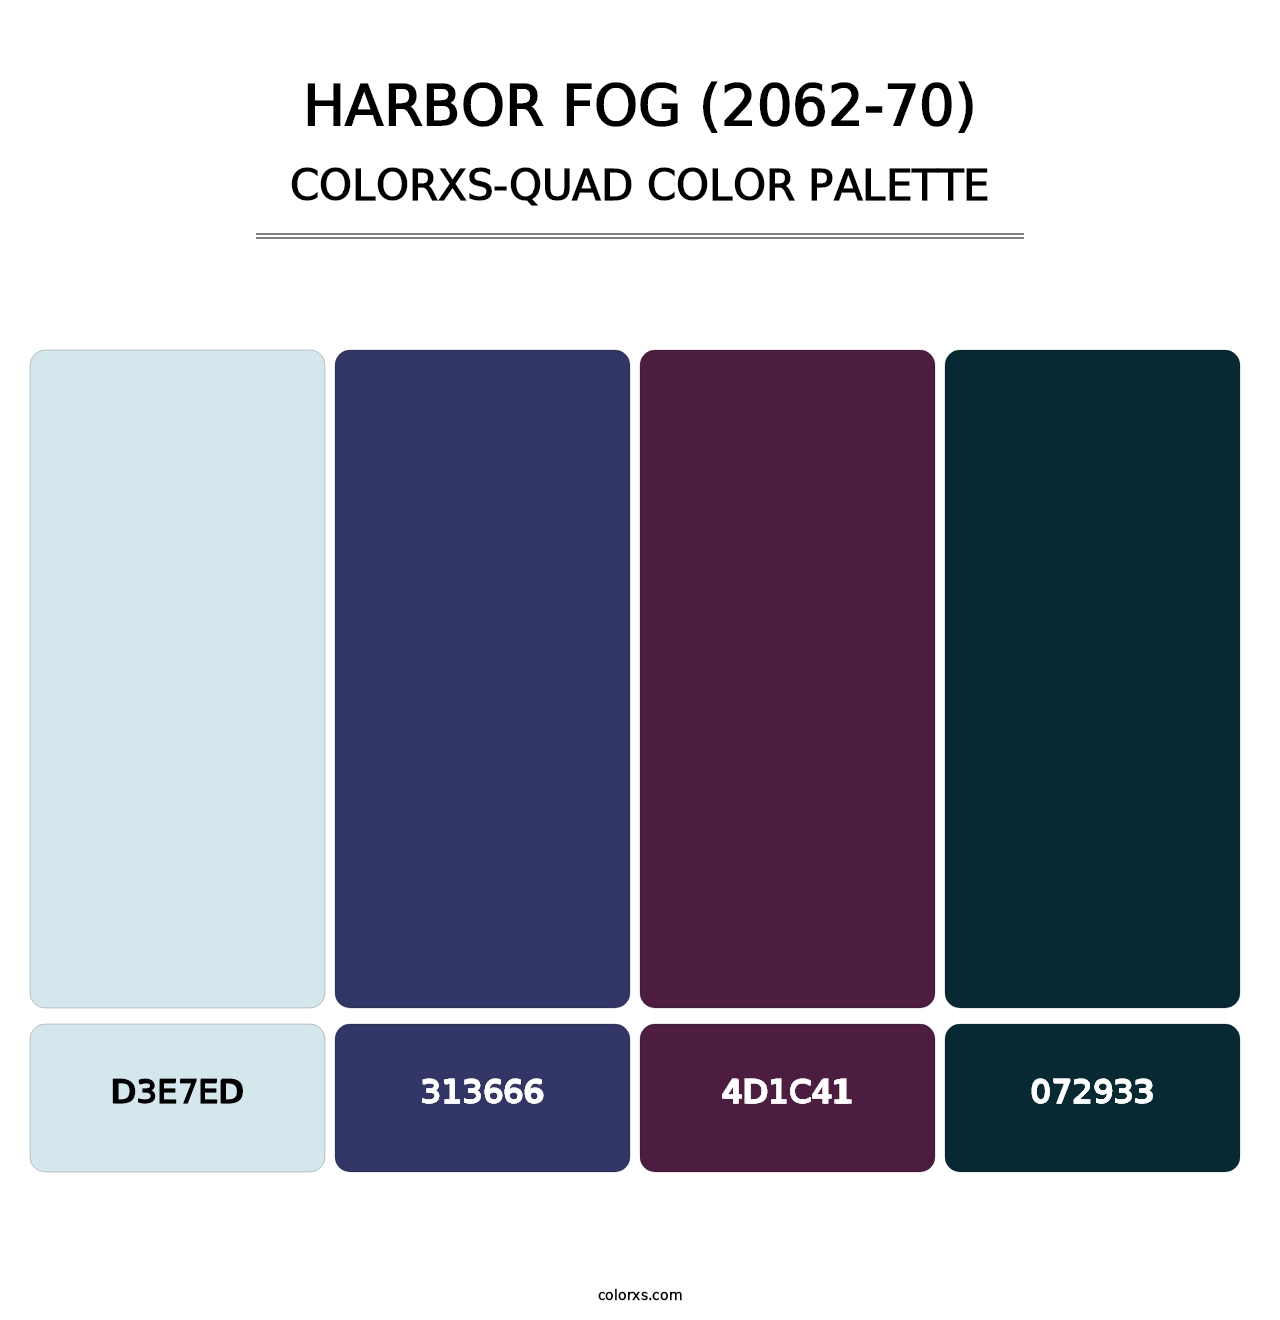 Harbor Fog (2062-70) - Colorxs Quad Palette